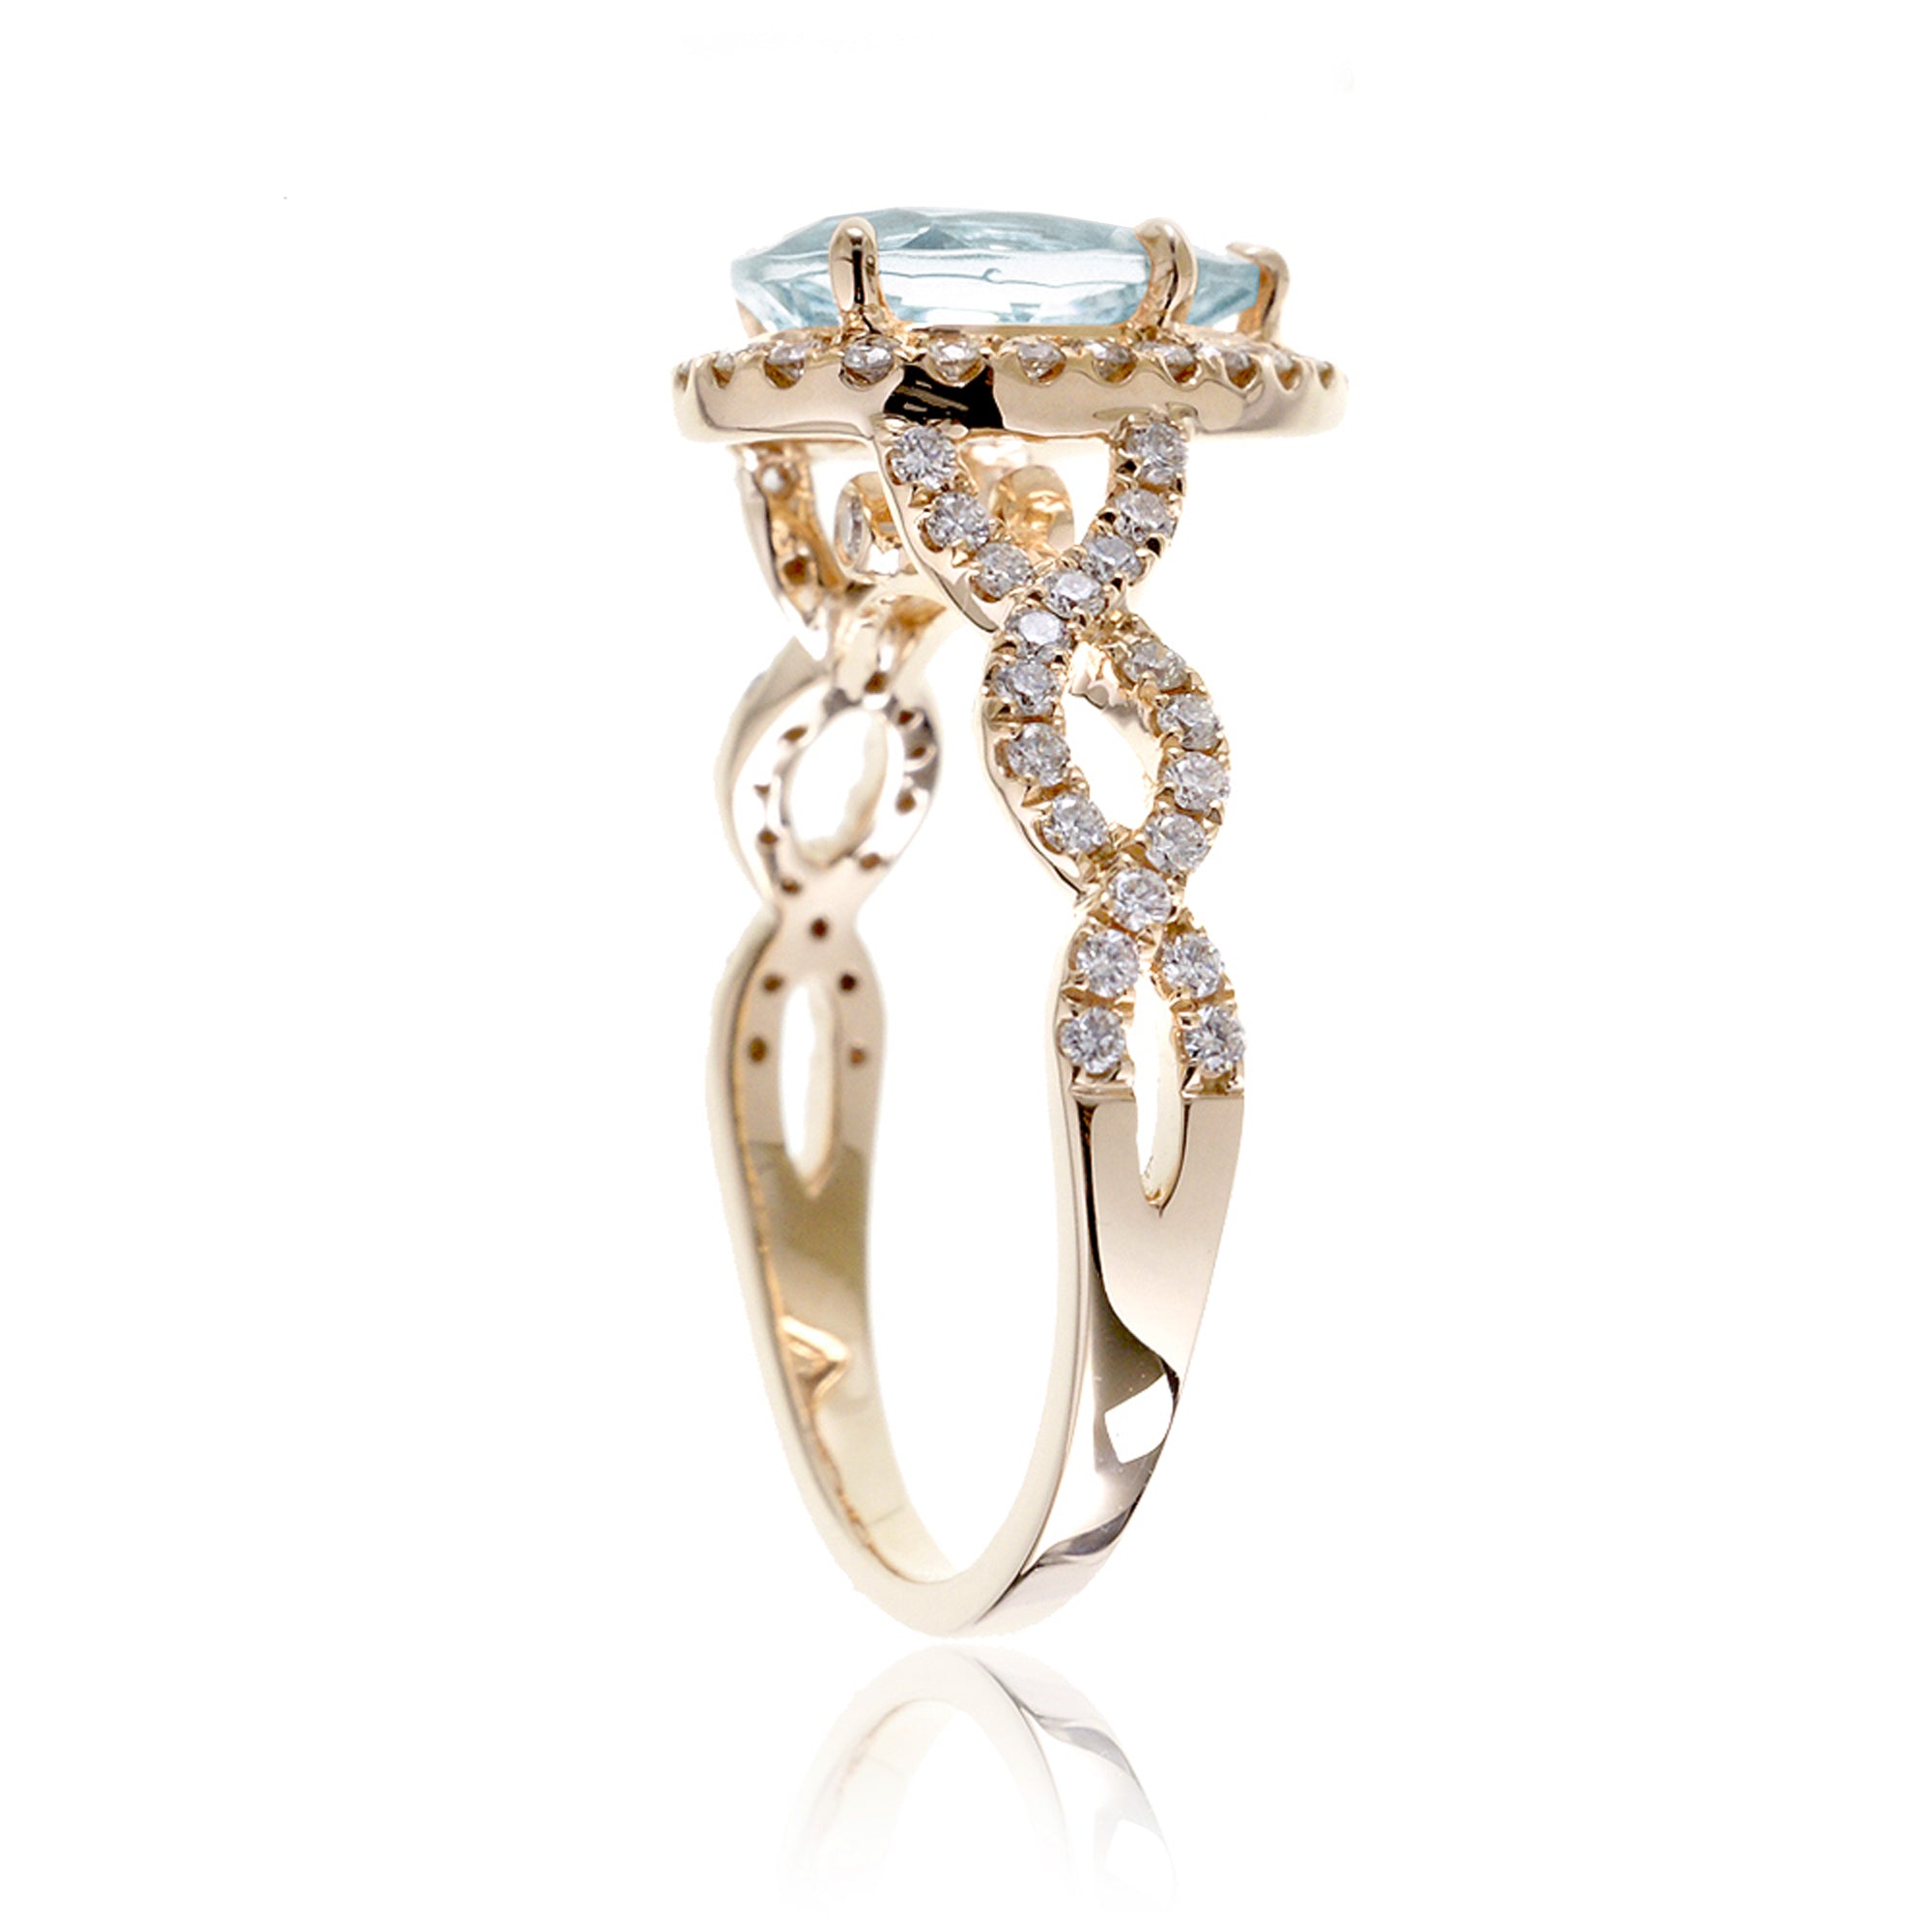 Pear aquamarine gemstone ring diamond halo twisted band yellow gold